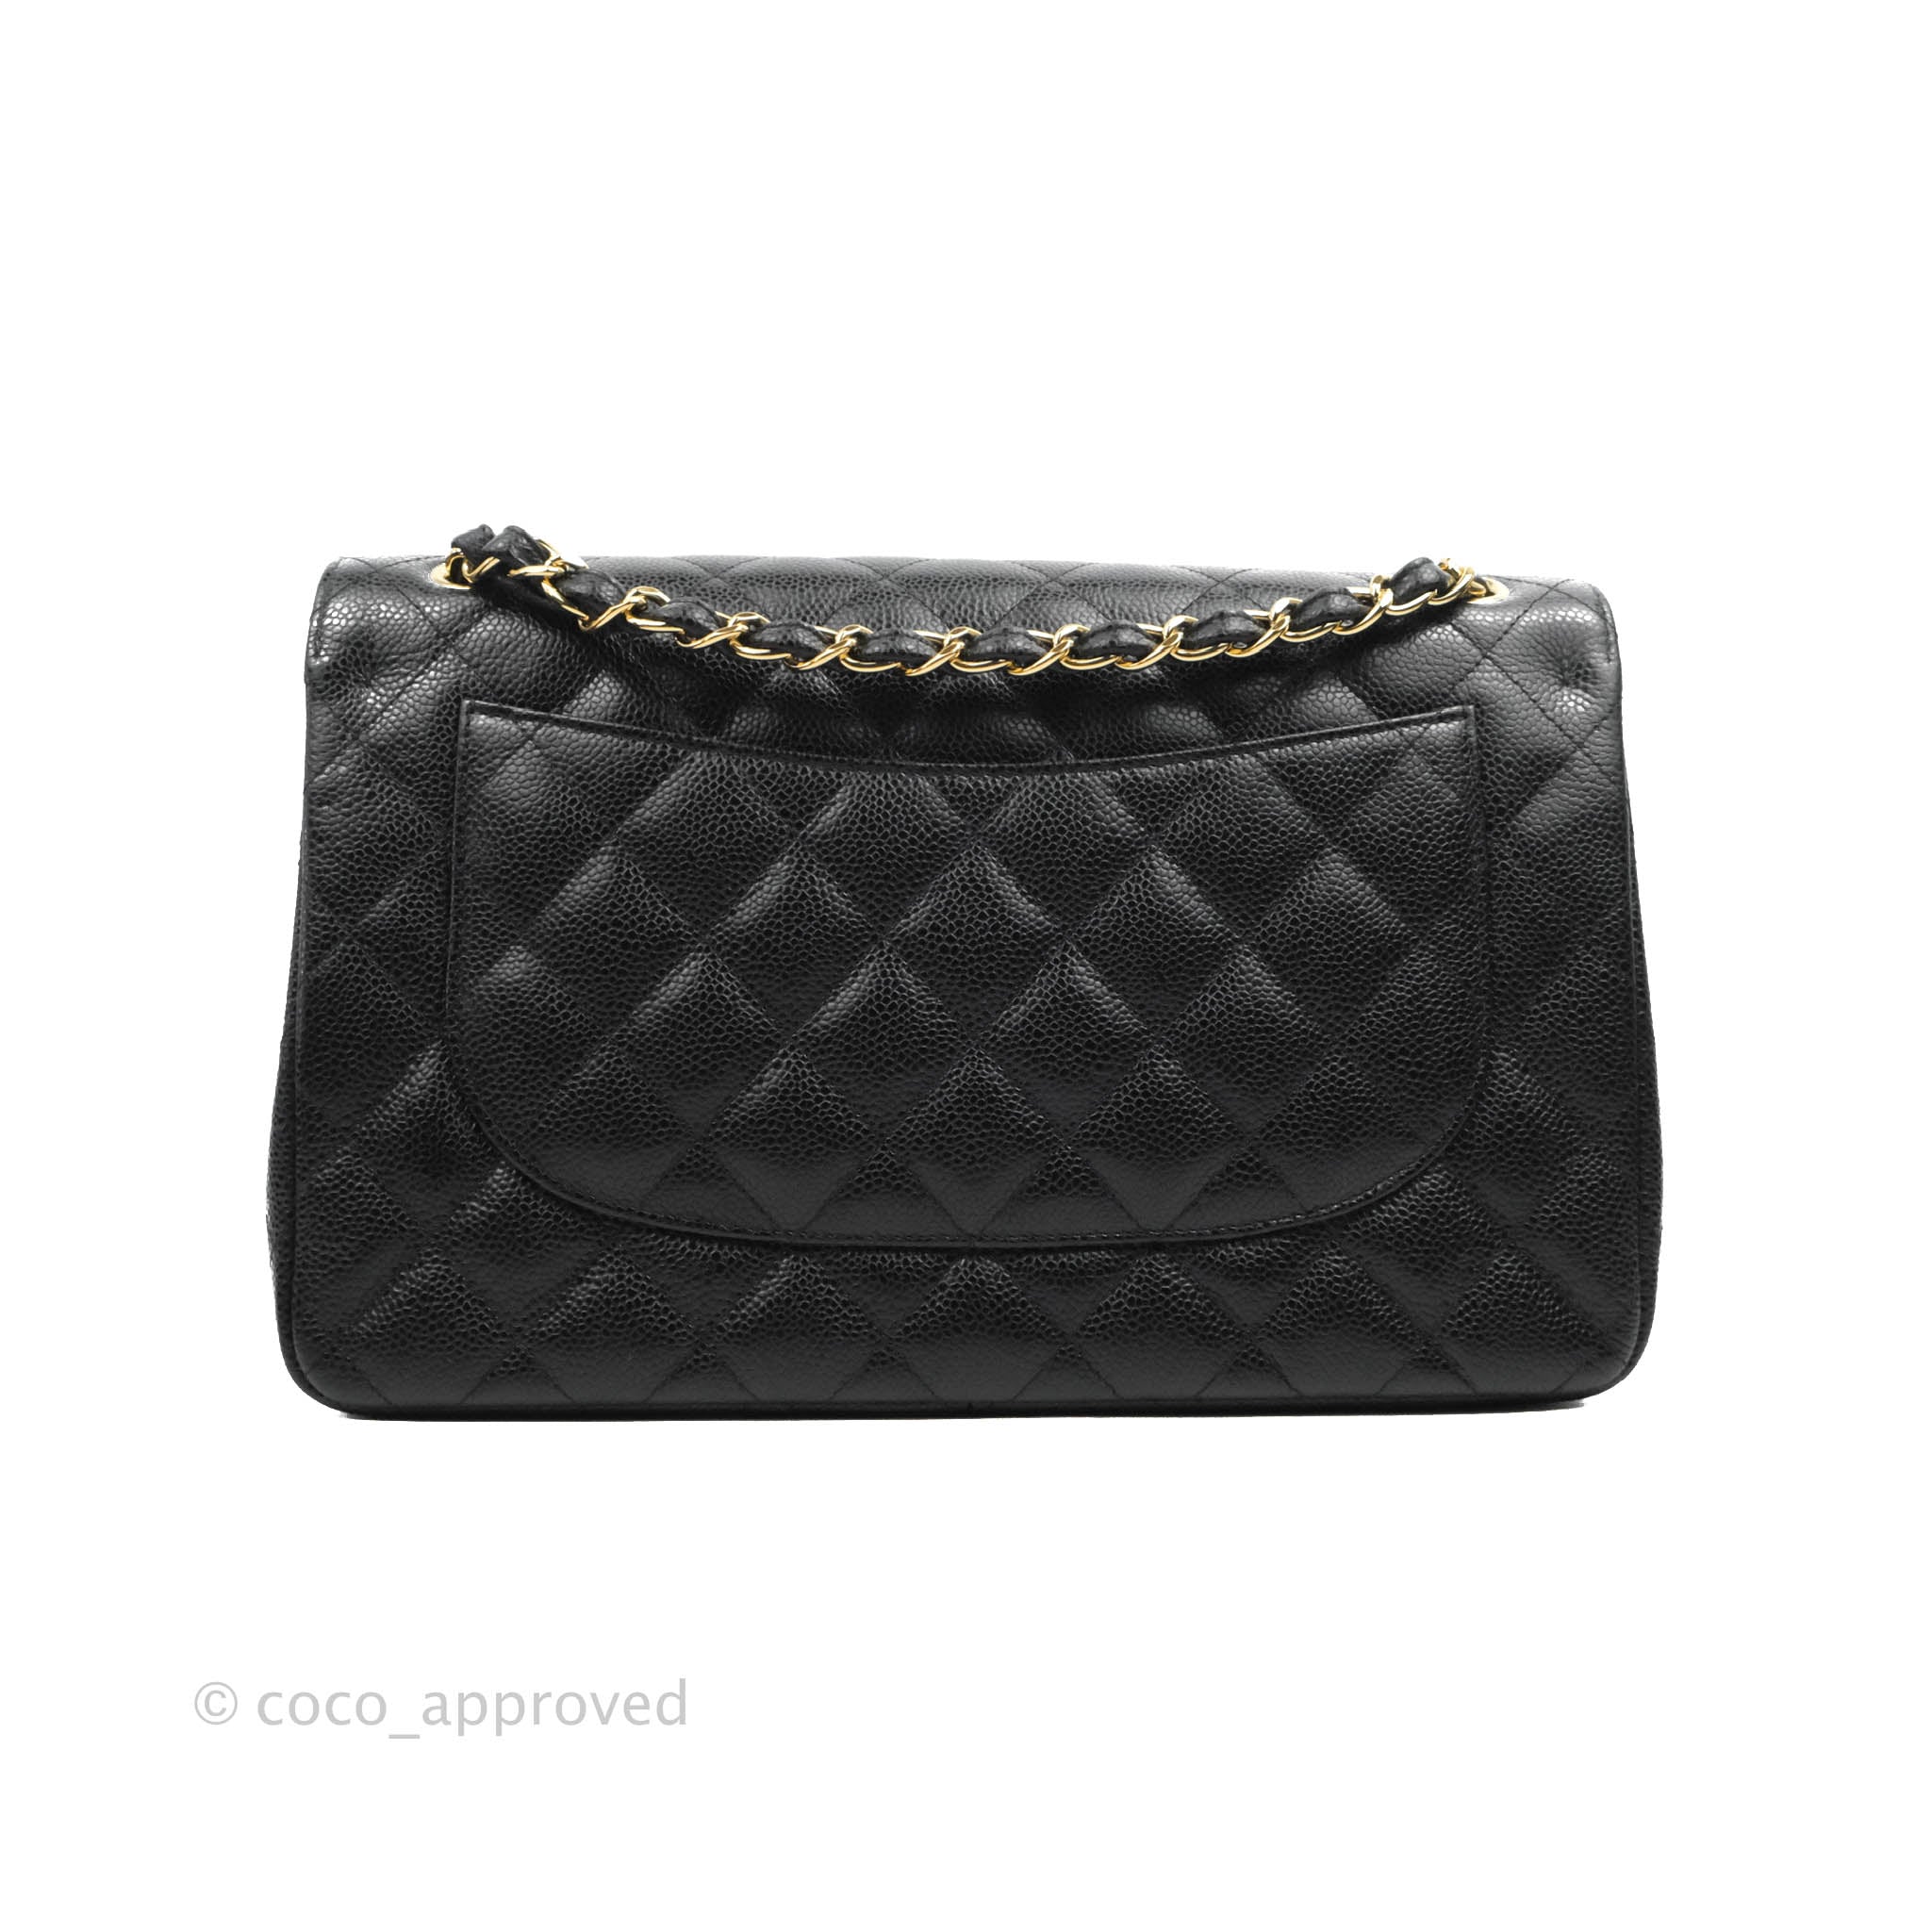 Chanel Black Caviar CC Classic Jumbo Double Flap Bags - Chanel Handbags -  Vascara Bags